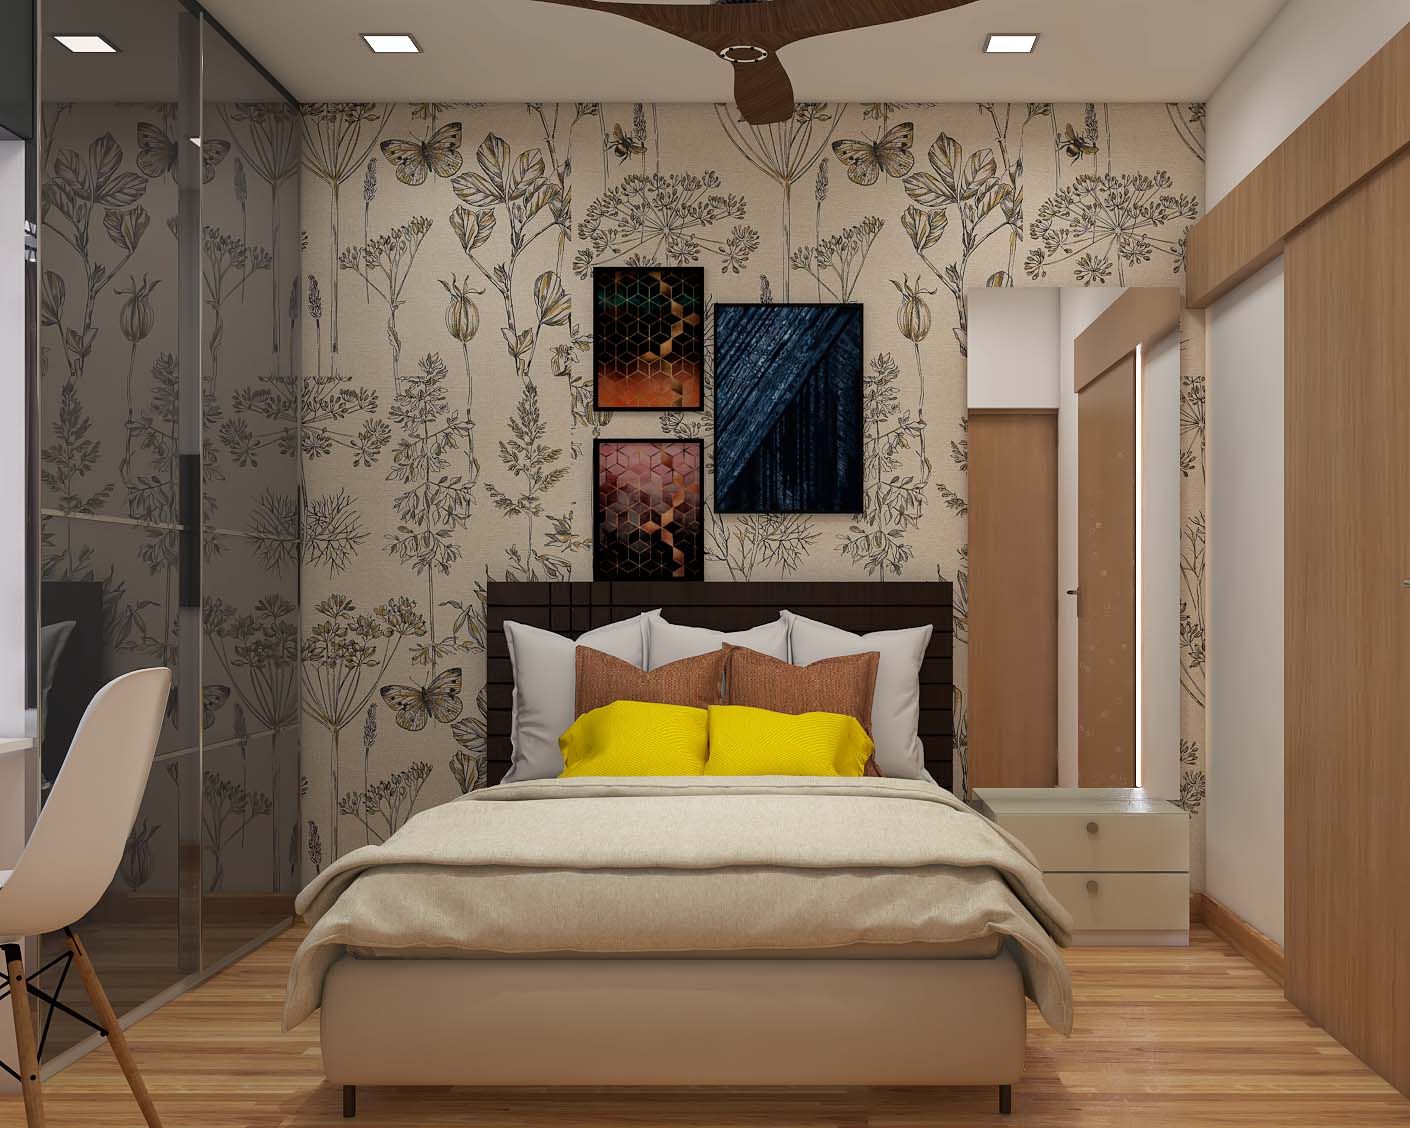 Contemporary Master Bedroom Design With Wooden Headboard